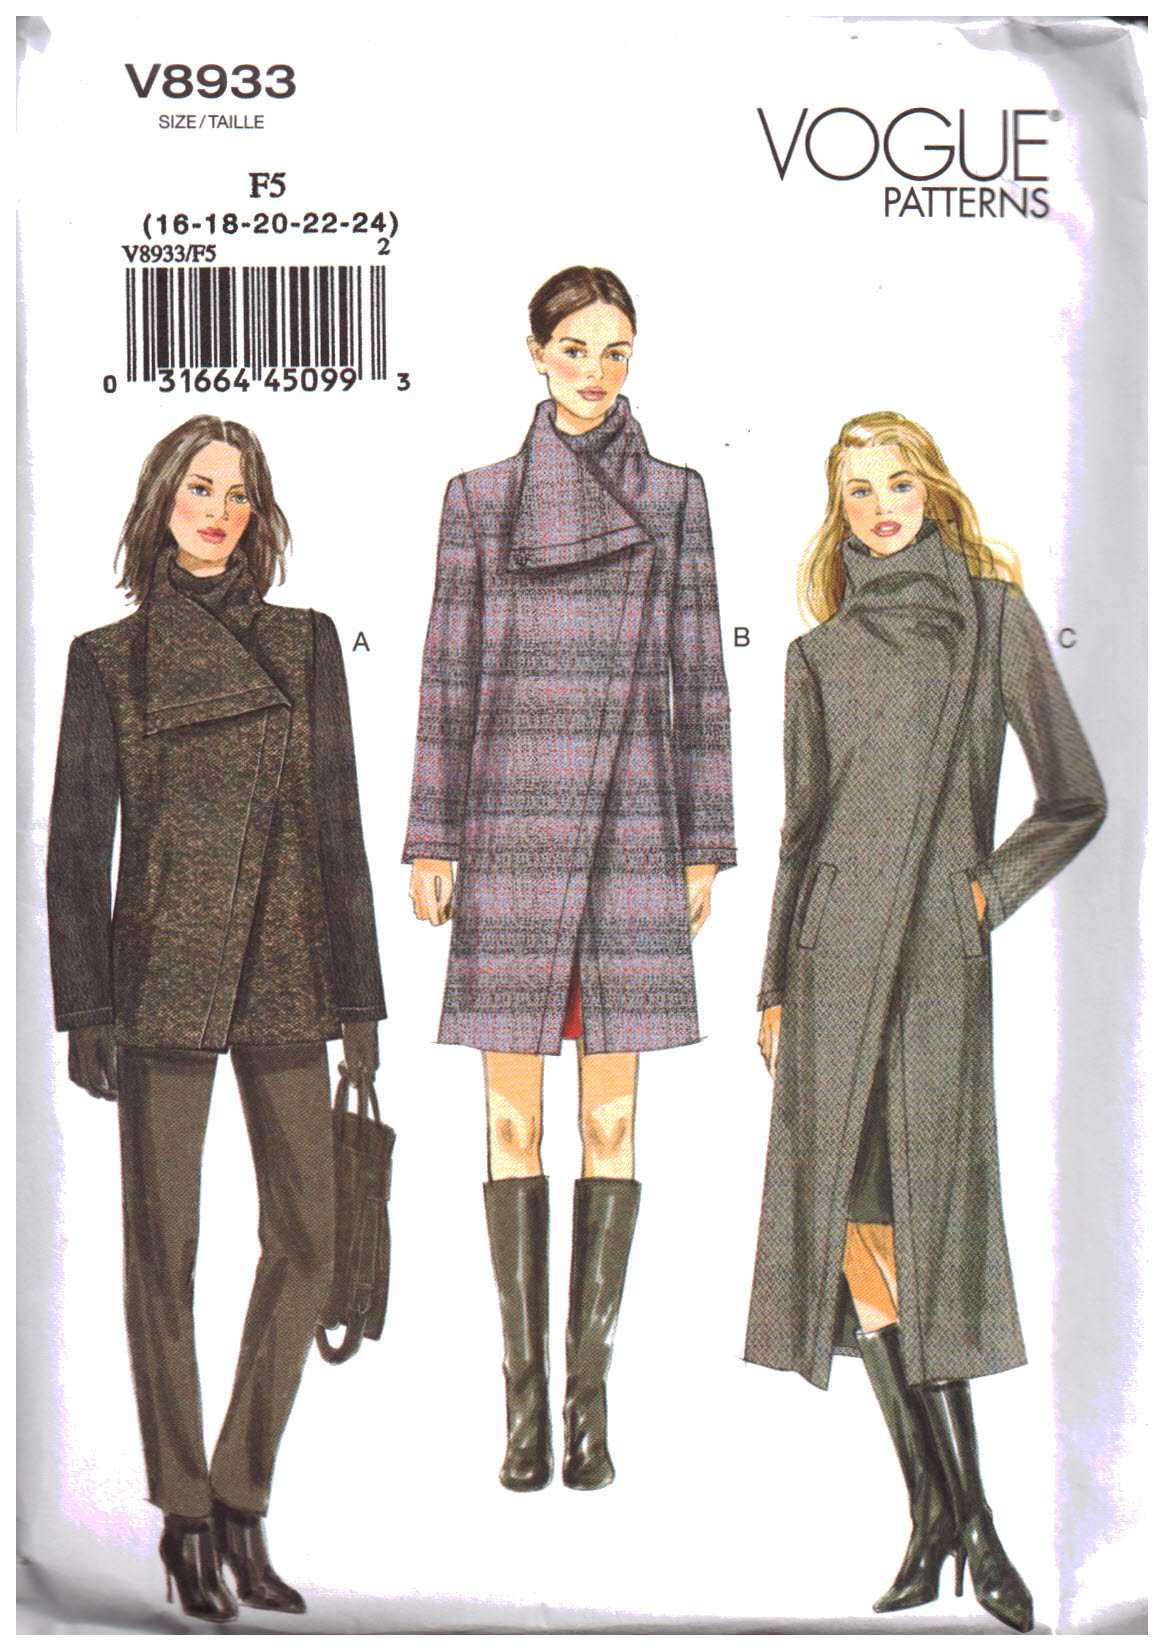 Vogue V8933 Coat Size: F5 16-18-20-22-24 Uncut Sewing Pattern